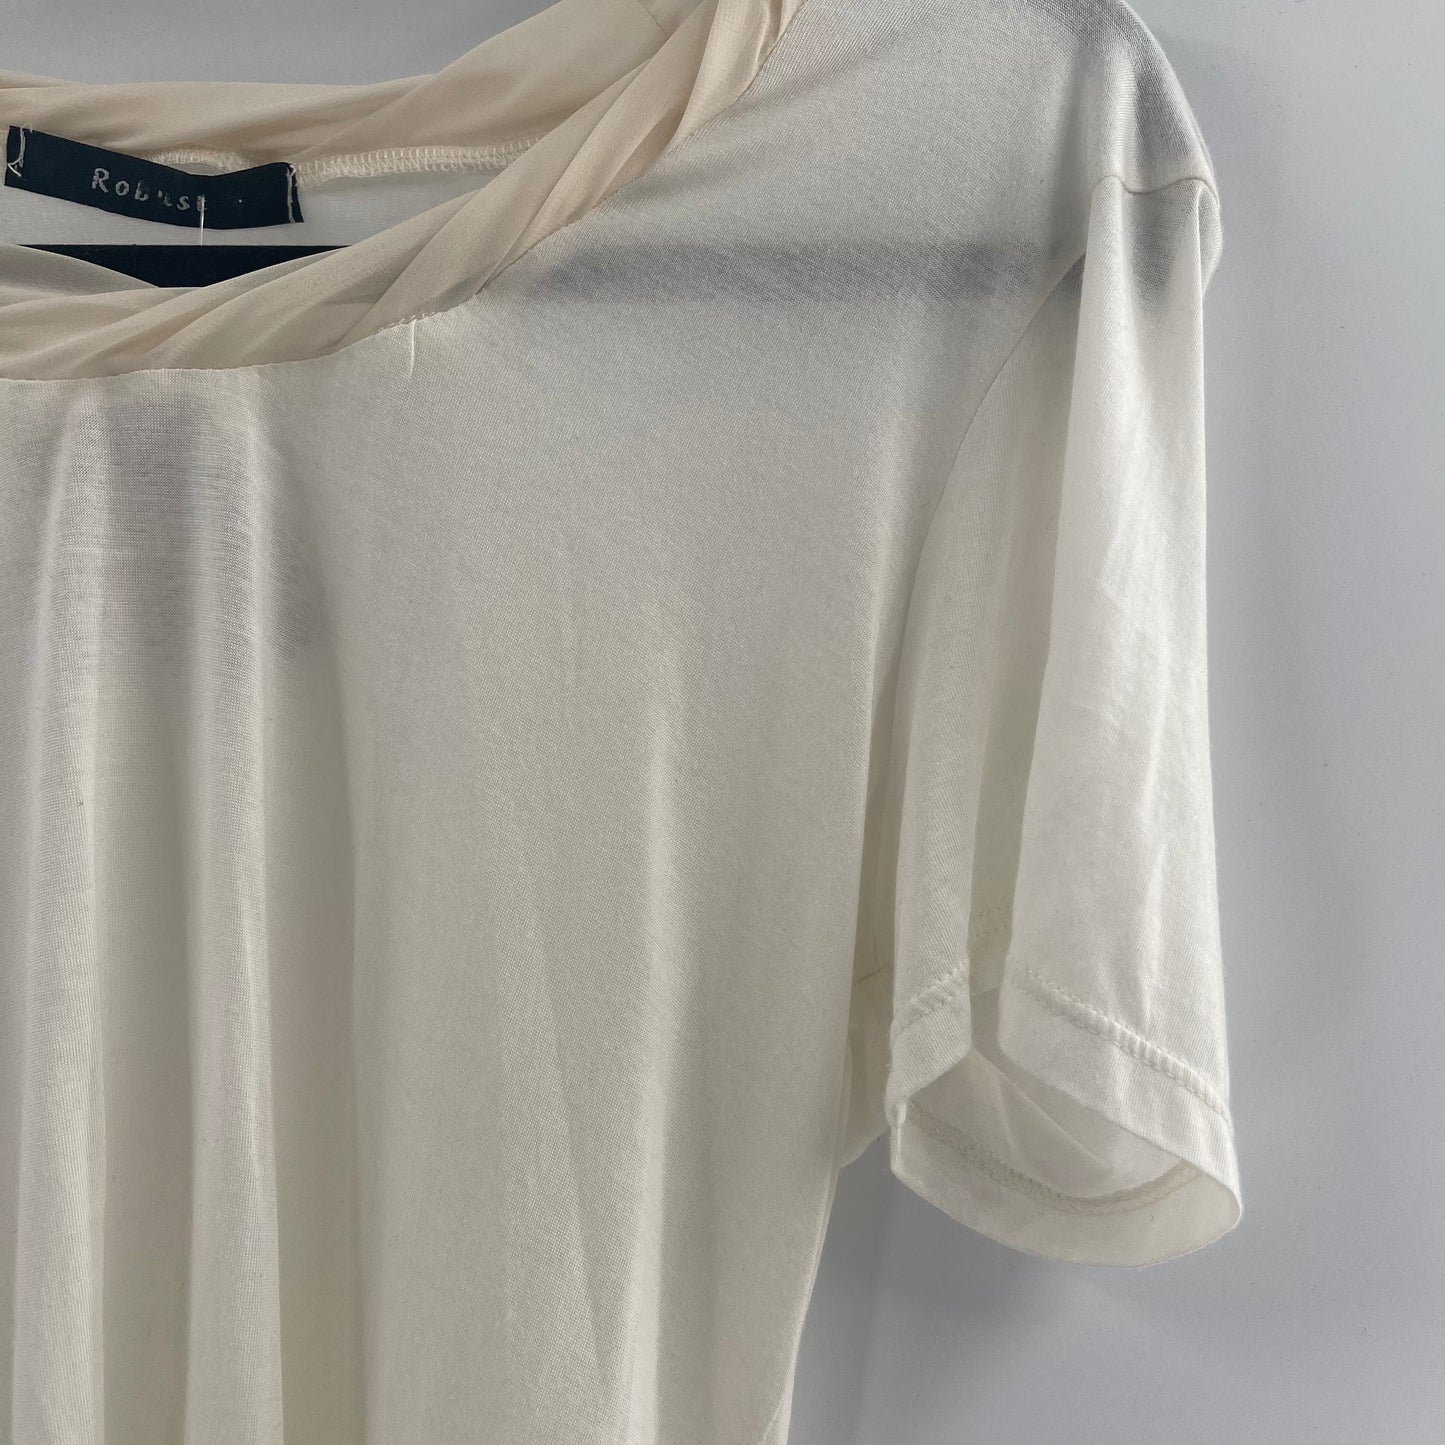 Anthropologie- Robust - Cream Short Sleeve Top With Organza Detail on Neckline (Size S)